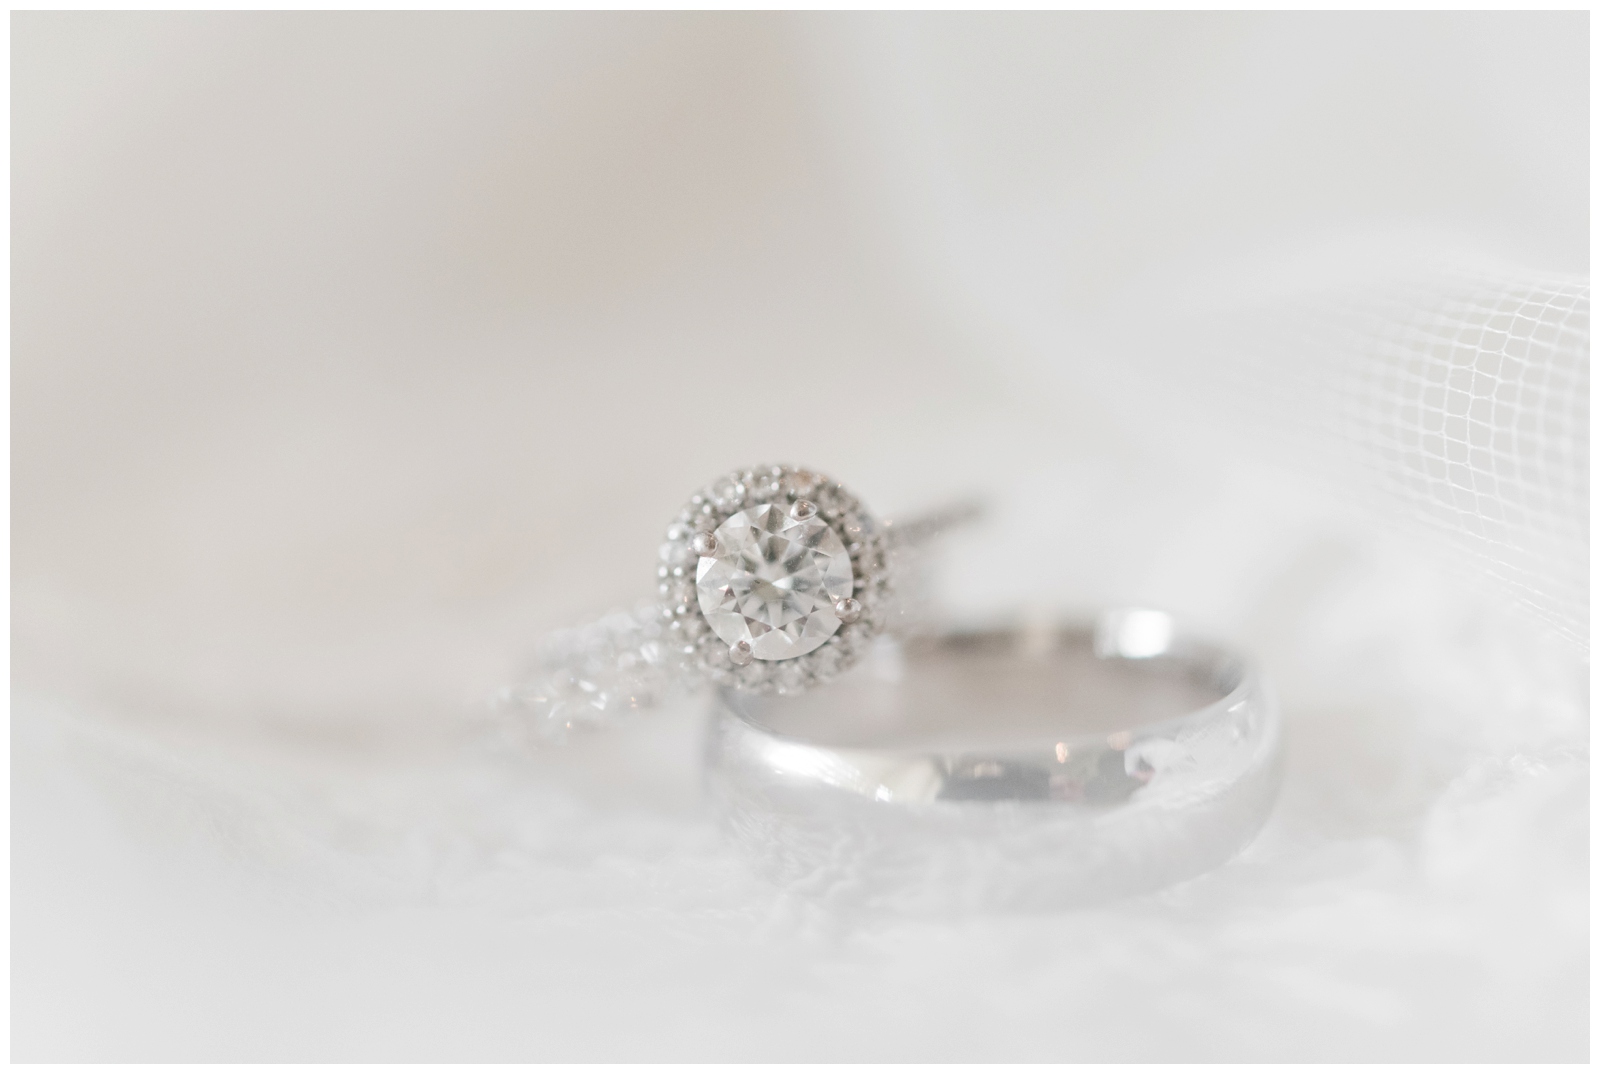 diamond engagement ring sits on wedding band during Ohio wedding day preparations